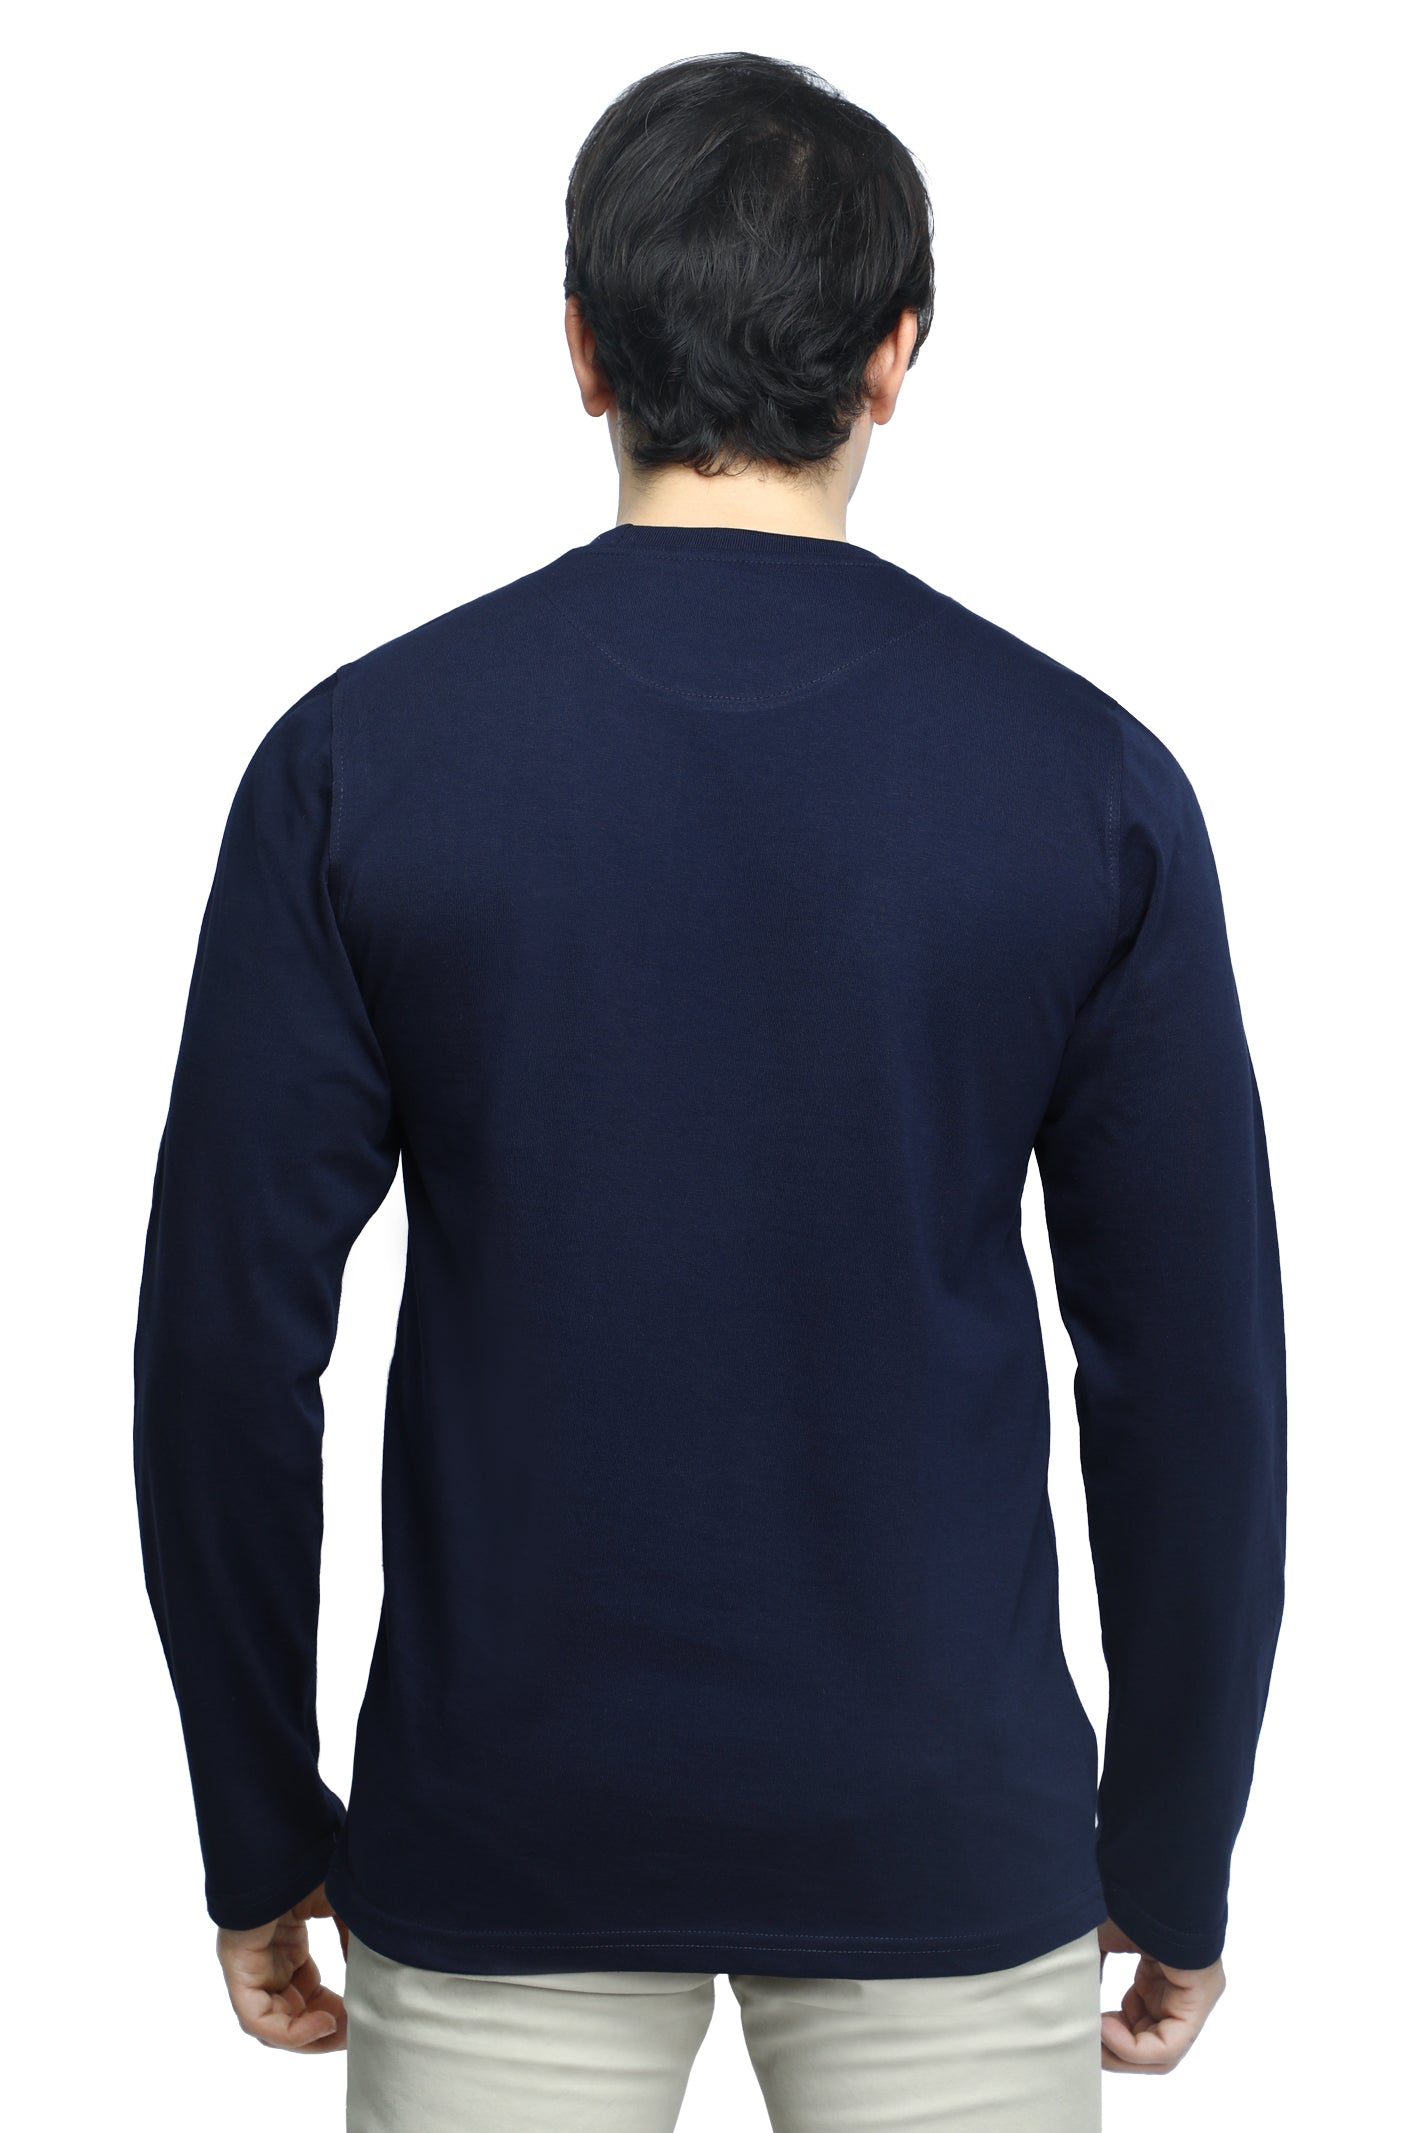 Diner's Men's Sweat Shirt SKU: FA940-N-BLUE - Diners